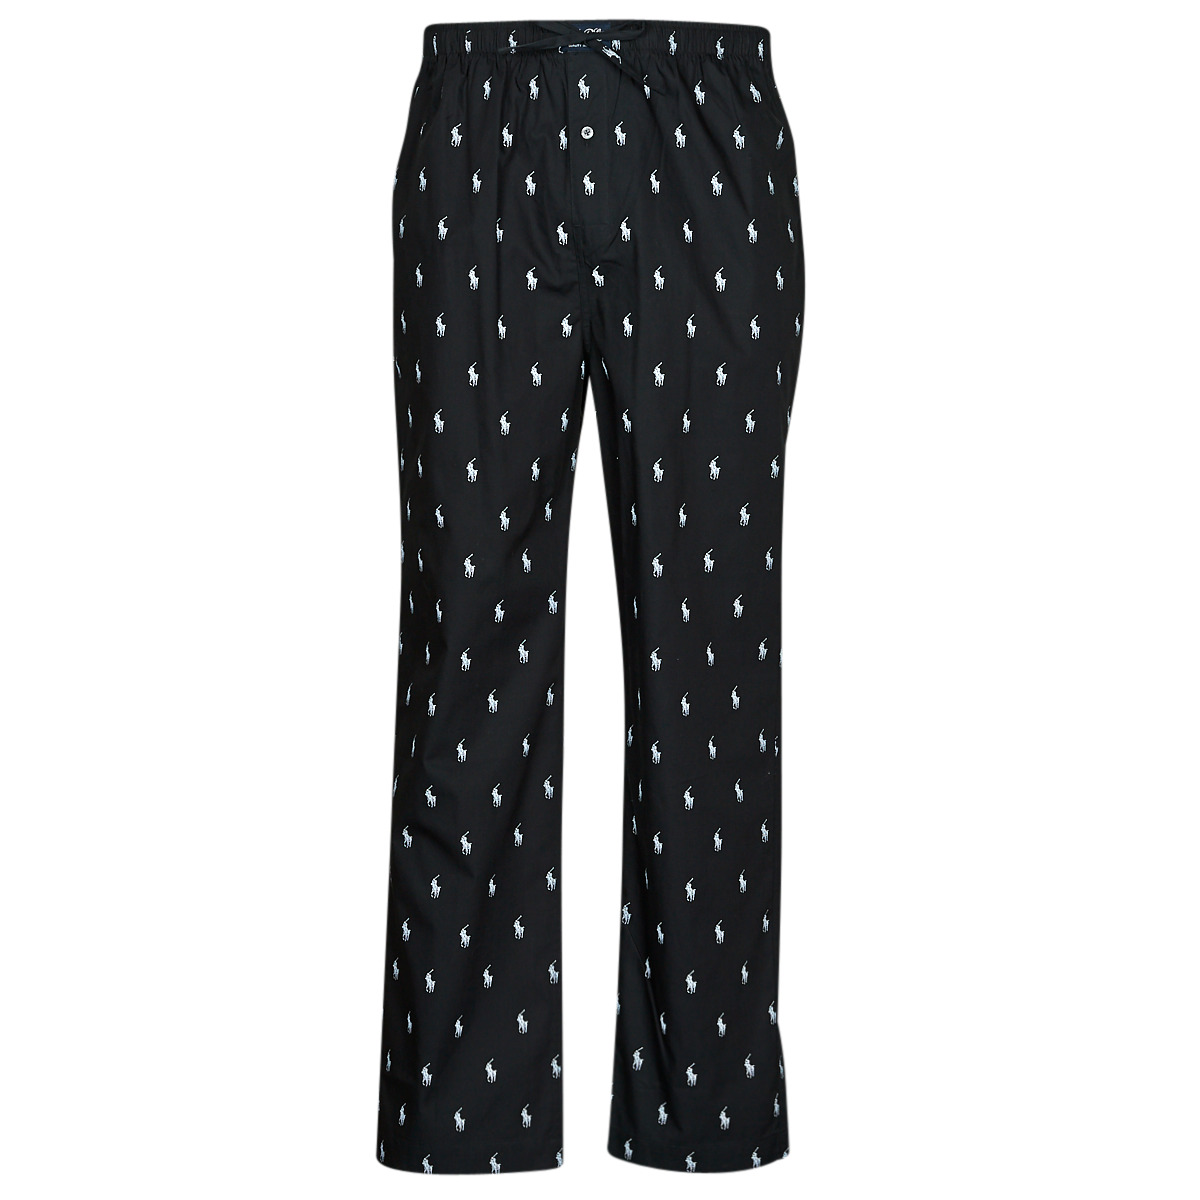 textil Pyjamas/nattlinne Polo Ralph Lauren SLEEPWEAR-PJ PANT-SLEEP-BOTTOM Svart / Vit